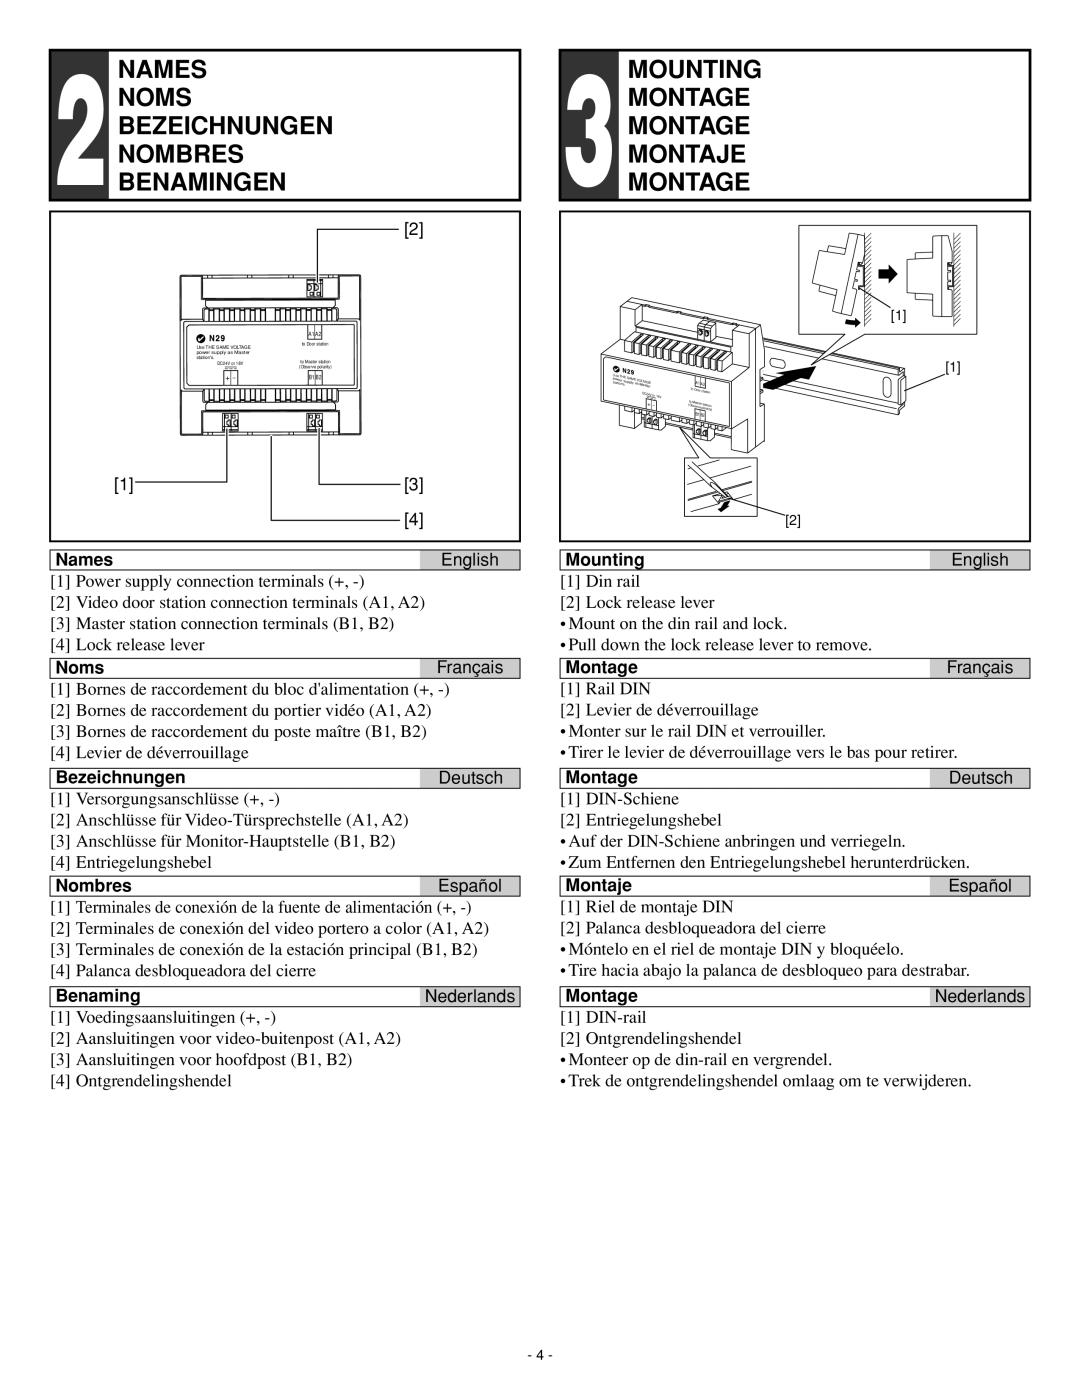 Aiphone JBW-BA installation manual NAMES 2NOMS BEZEICHNUNGEN NOMBRES BENAMINGEN, Mounting, 3MONTAGE MONTAGE MONTAJE MONTAGE 